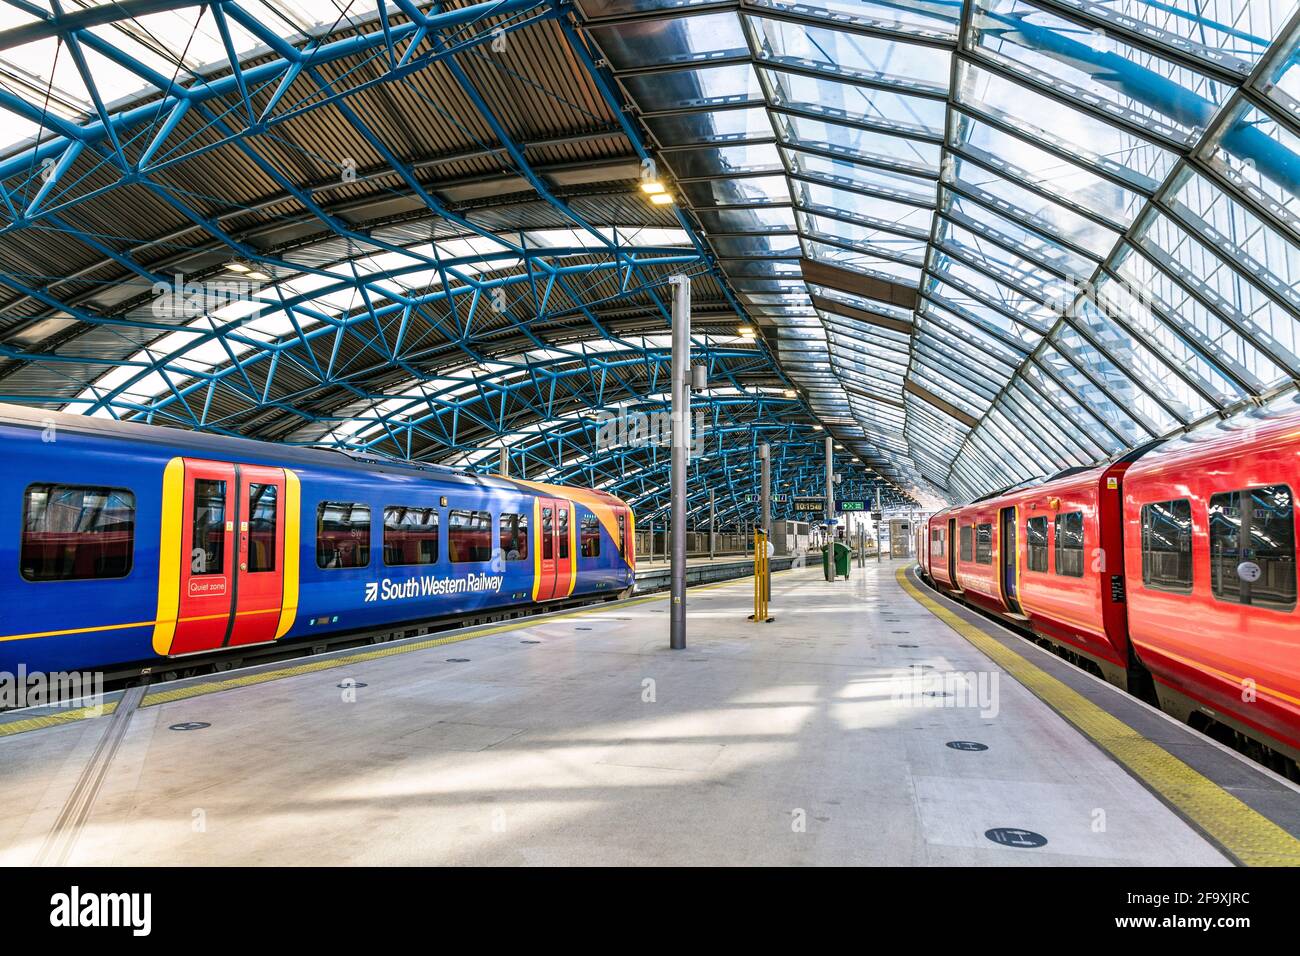 South Western Railway trains on platform, waiting to depart at Waterloo Station, London, UK Stock Photo